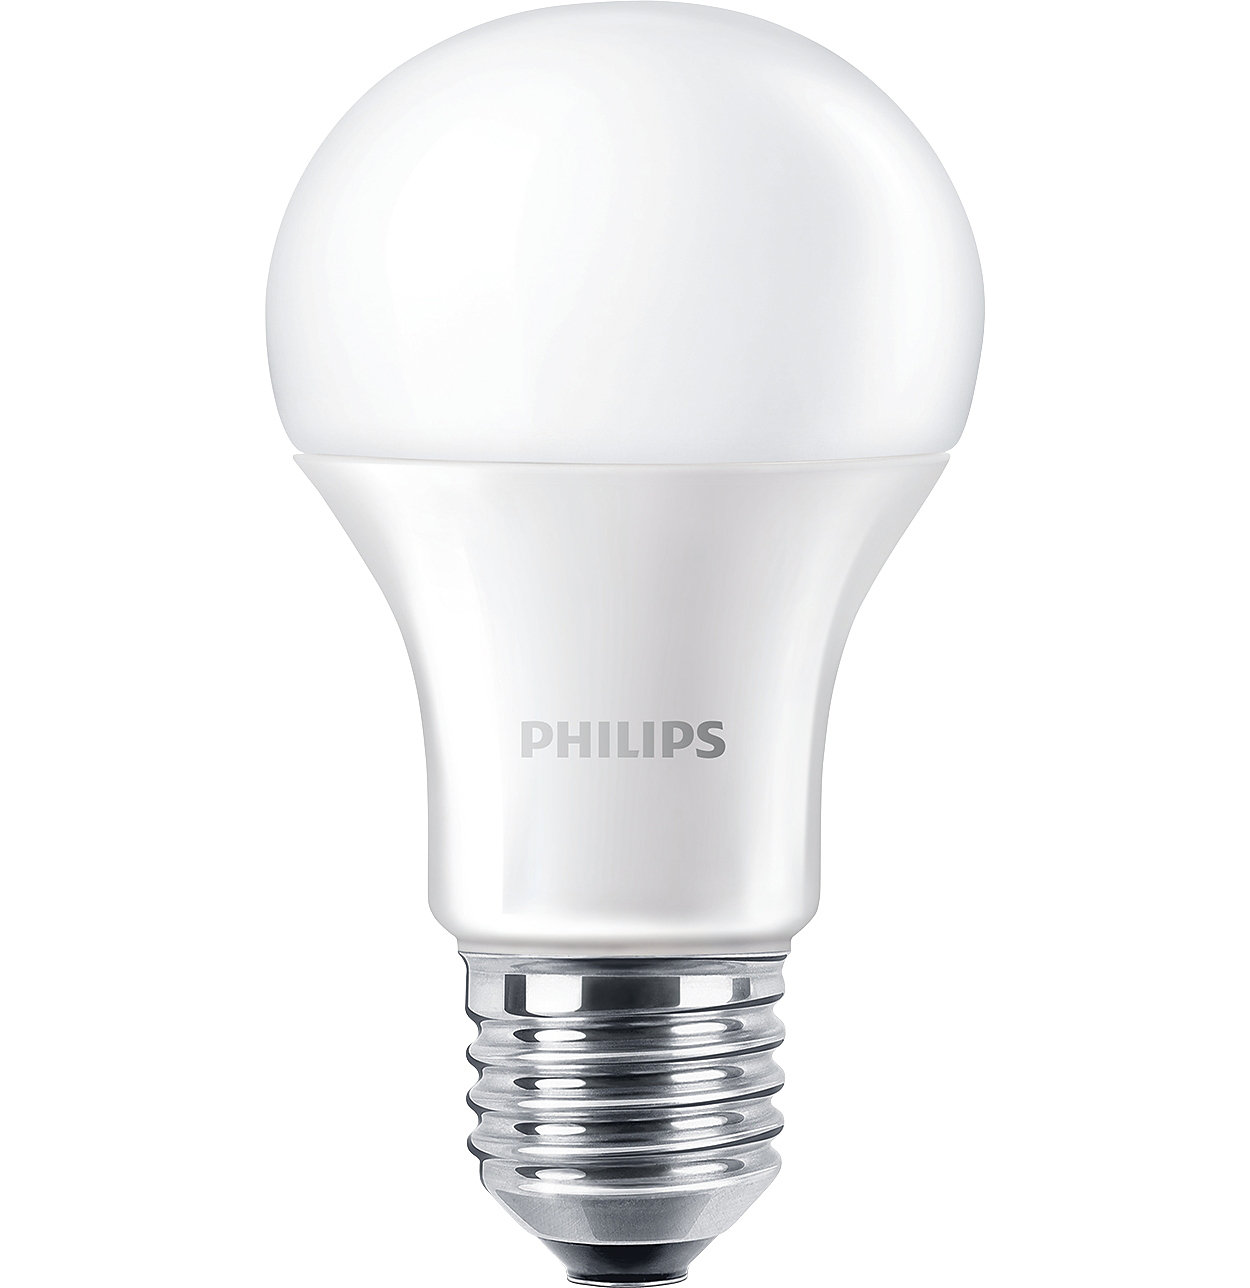 The affordable LEDbulb solution